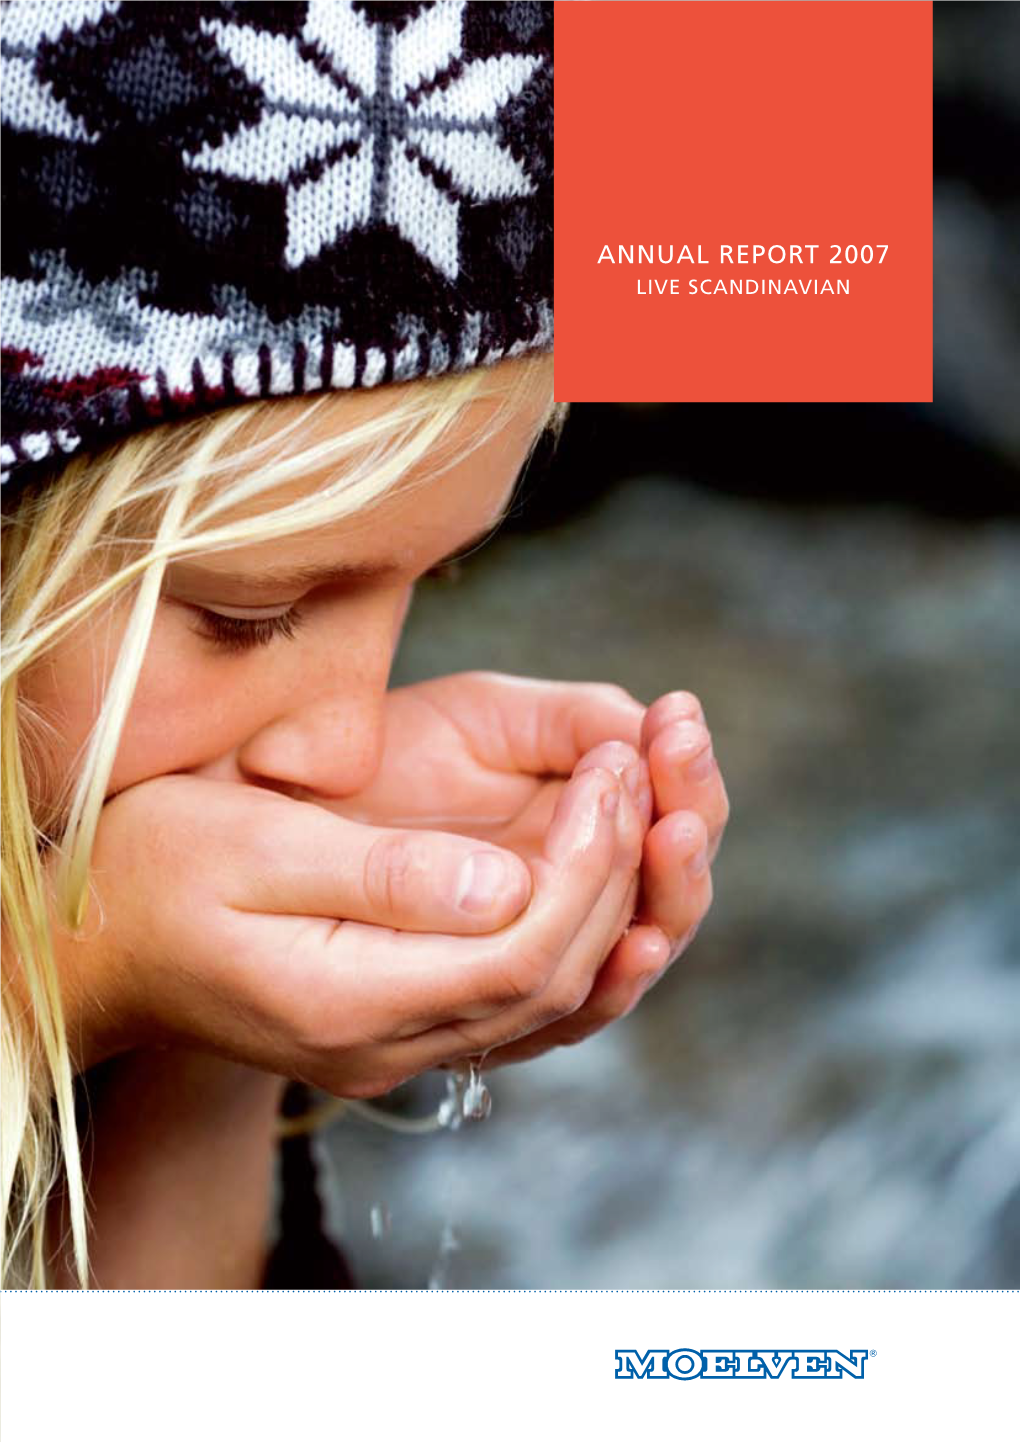 Annual Report 2007 Live Scandinavian